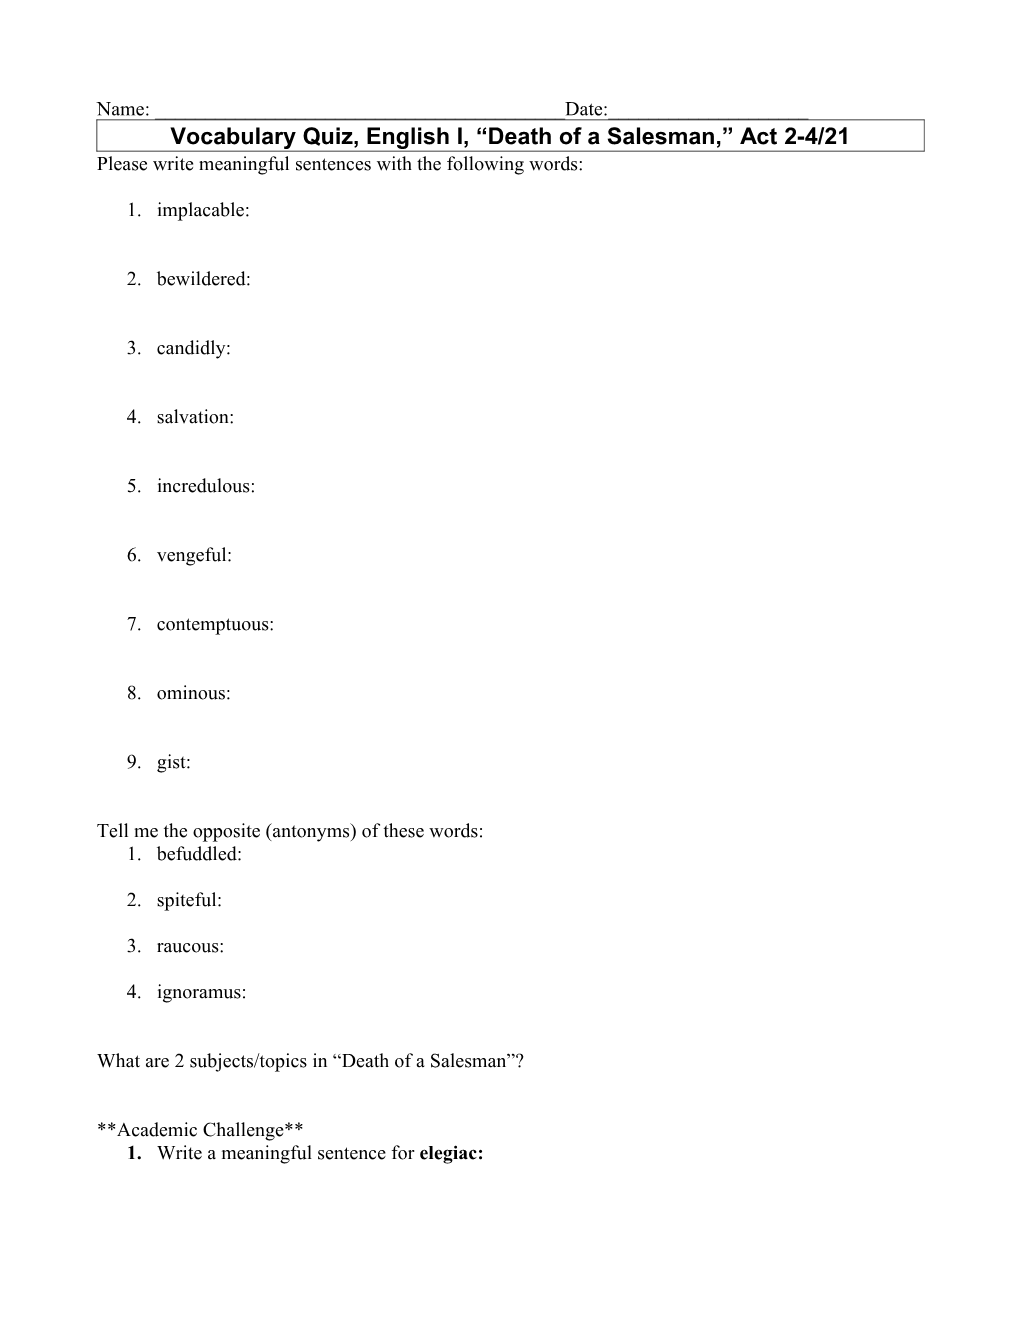 Vocabulary Quiz, English I, Death of a Salesman, Act 2-4/21